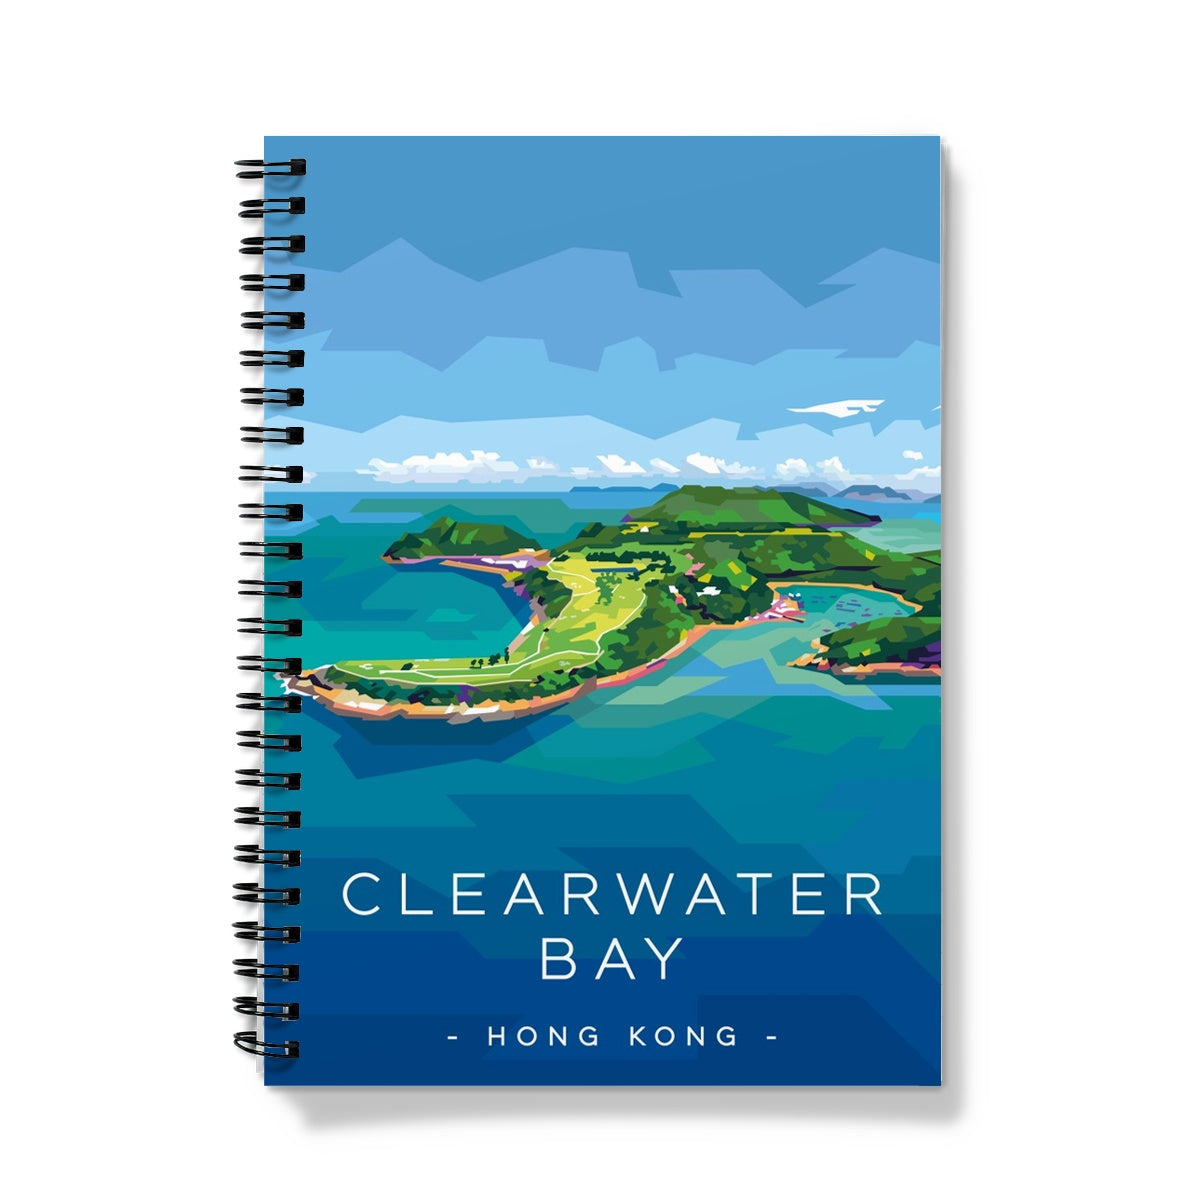 Hong Kong Travel - Clearwater Bay Notebook